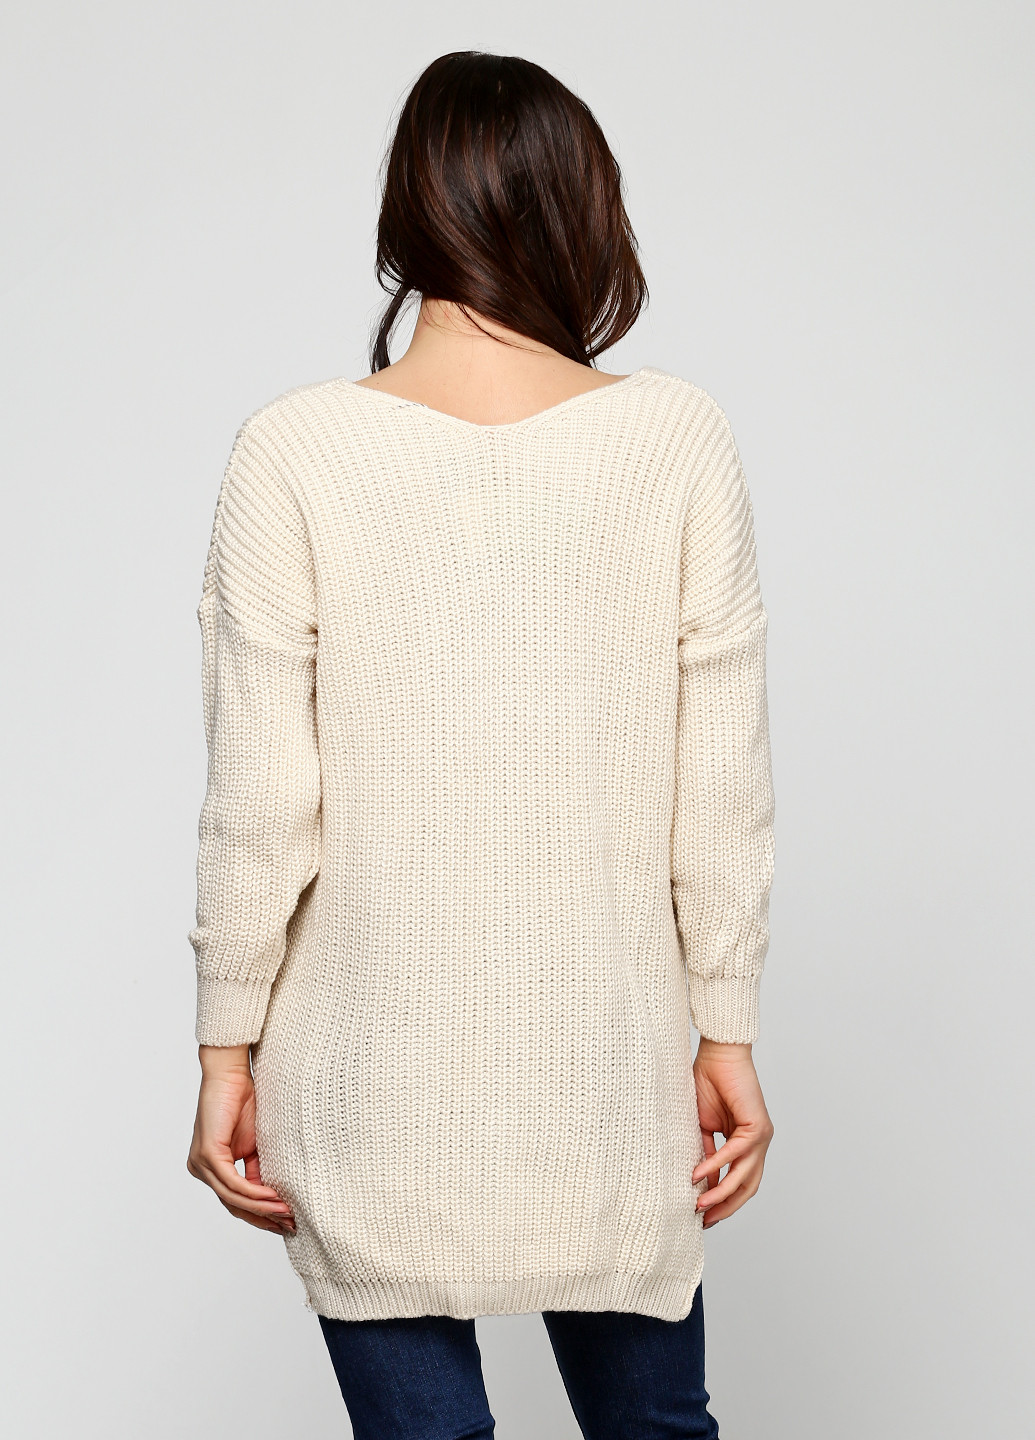 Бежевый демисезонный пуловер пуловер R&G